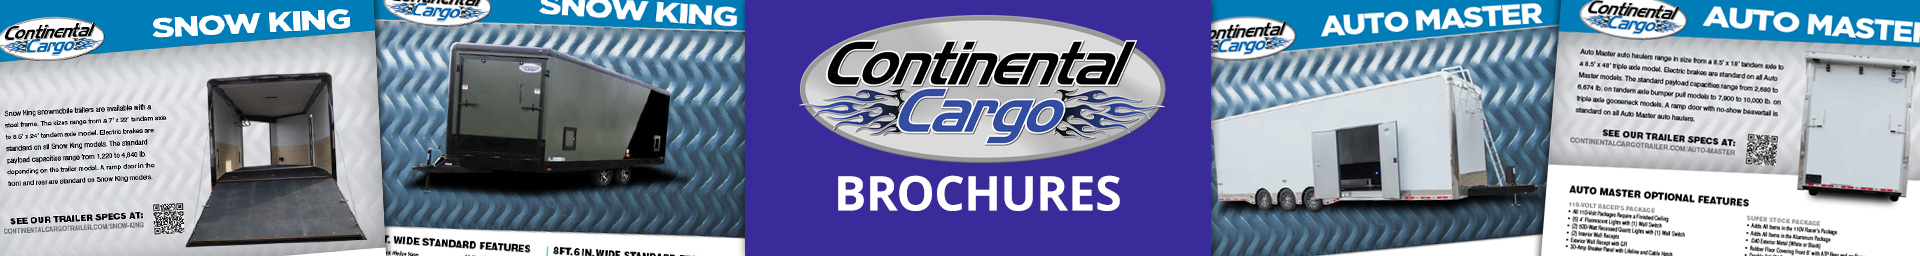 Continental Cargo Brochures